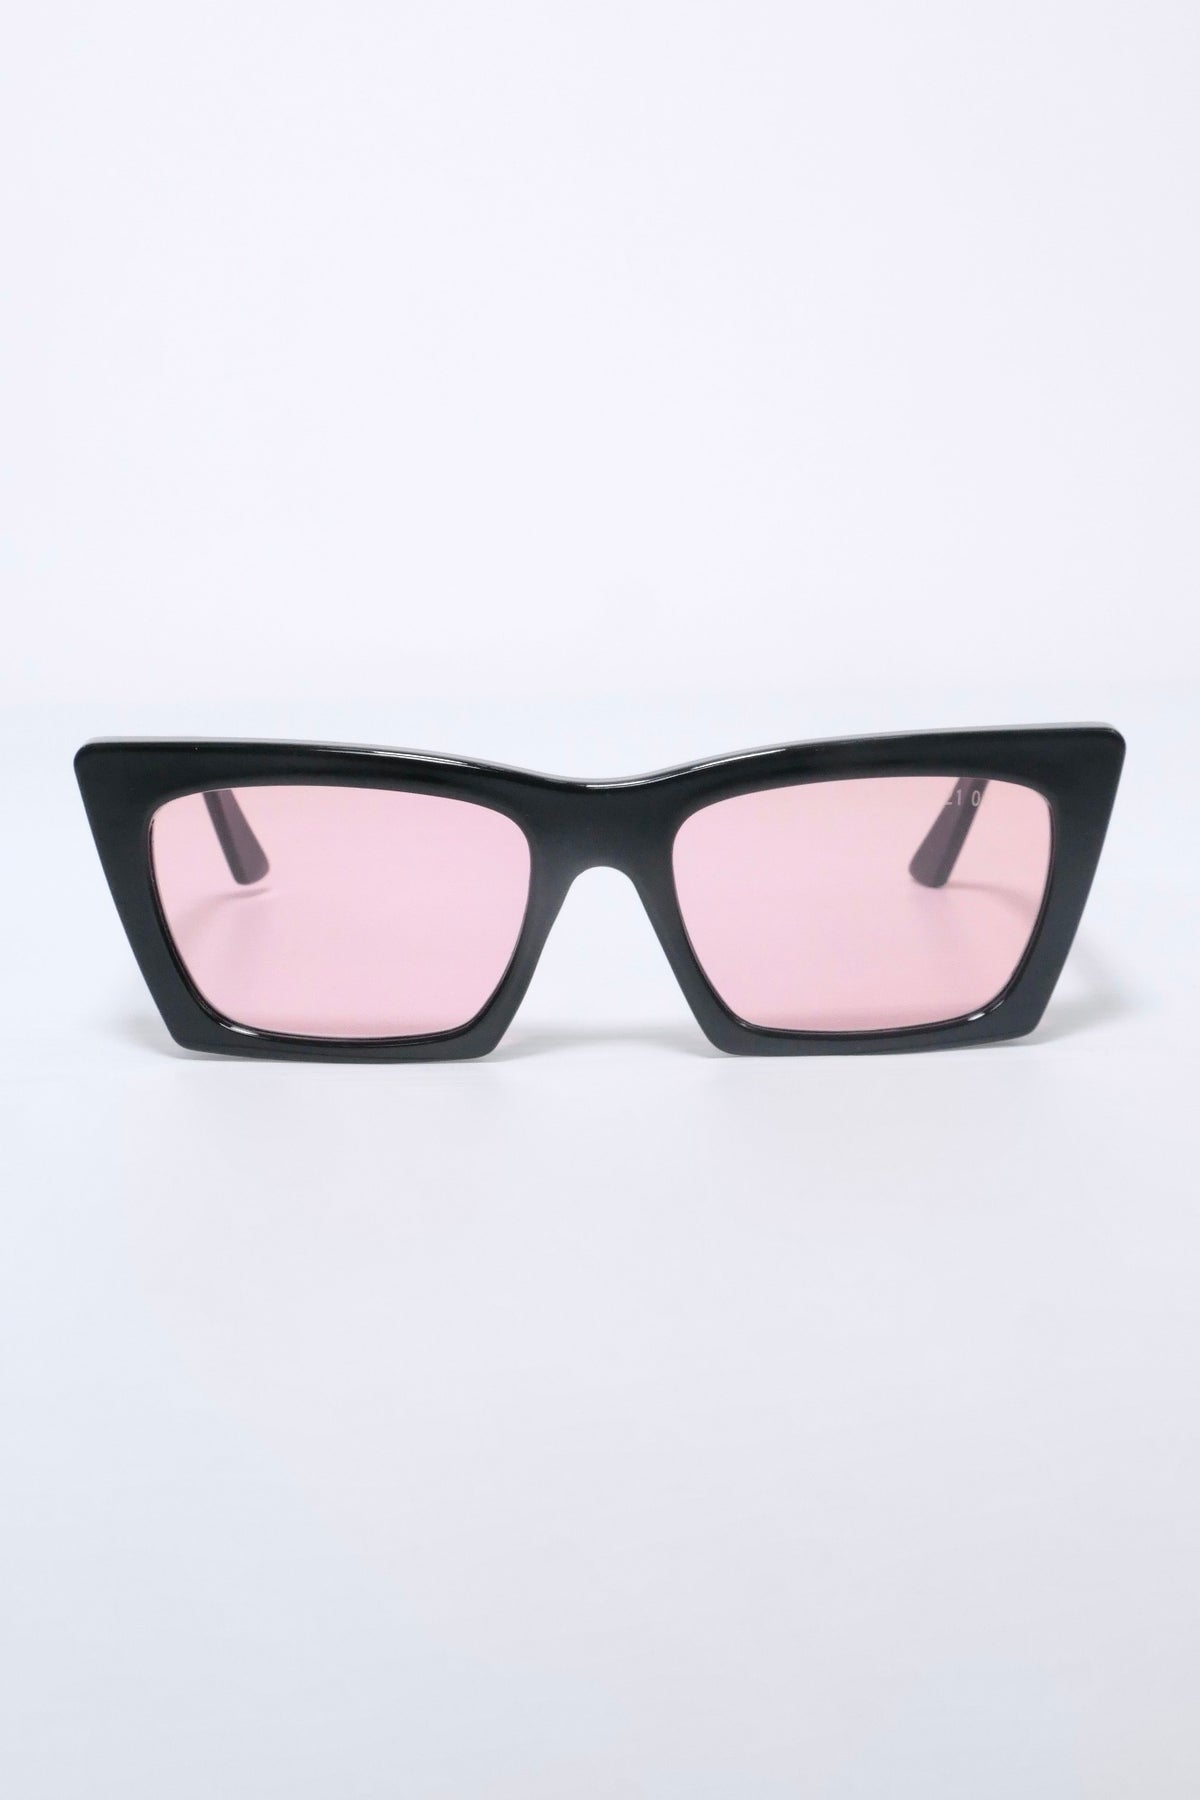 Clean Waves Type 04 Sunglasses - Black/Pink